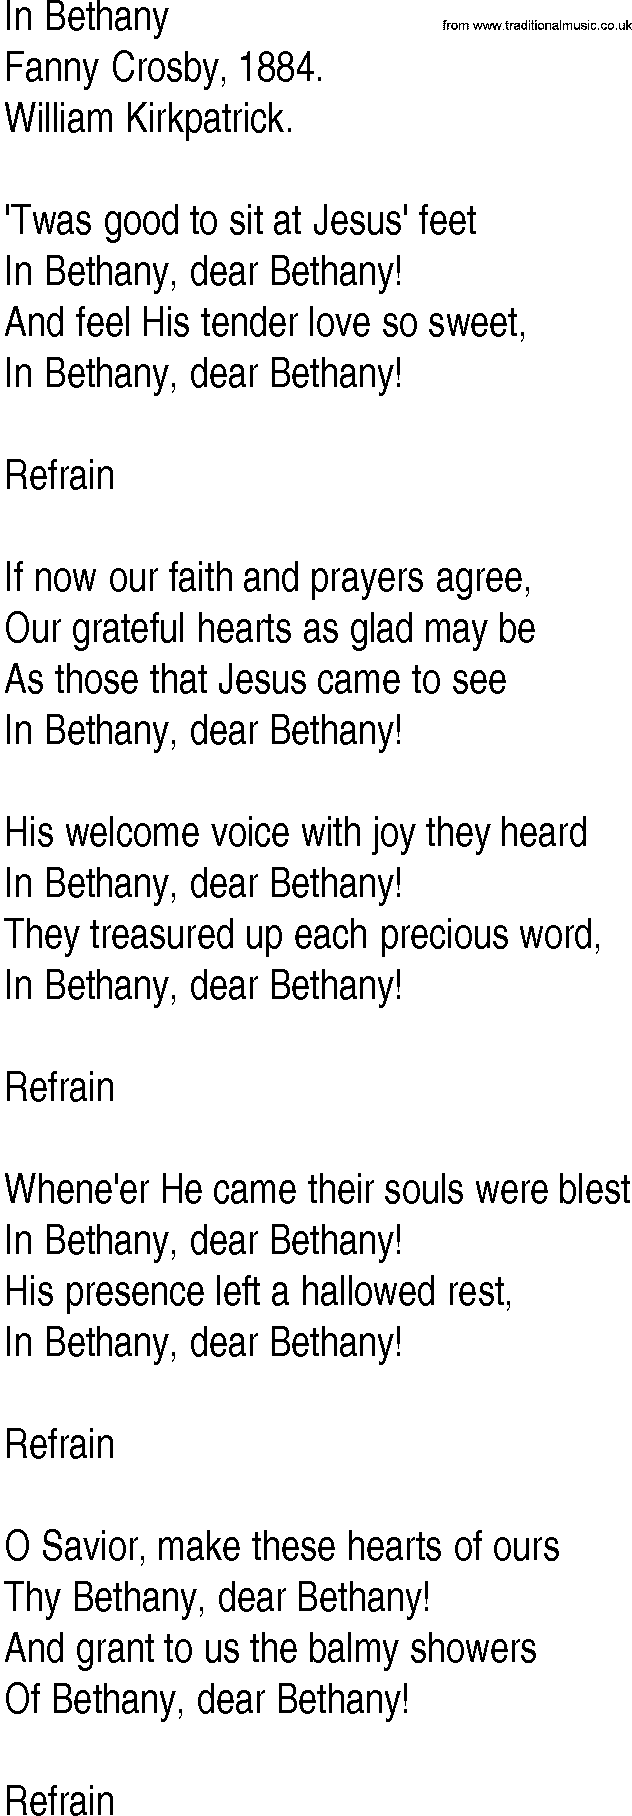 Hymn and Gospel Song: In Bethany by Fanny Crosby lyrics